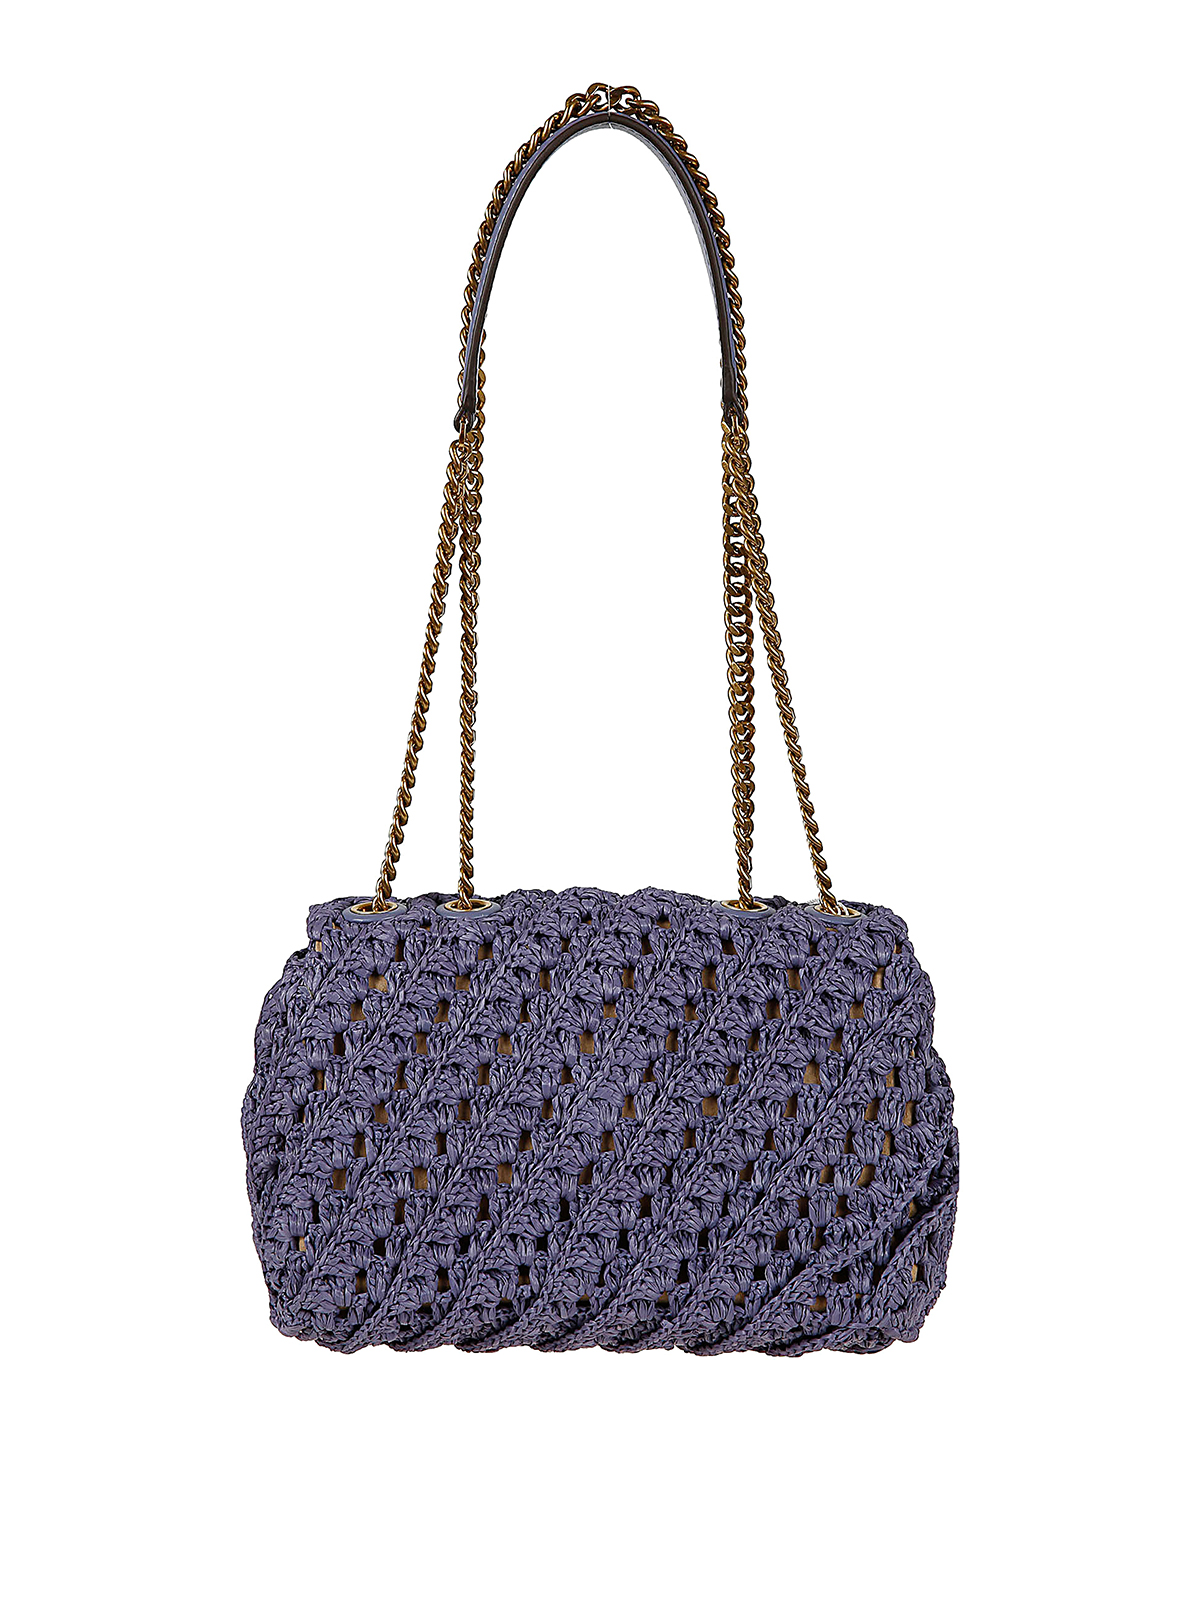 Tory Burch Kira Small Crochet Convertible Shoulder Bag